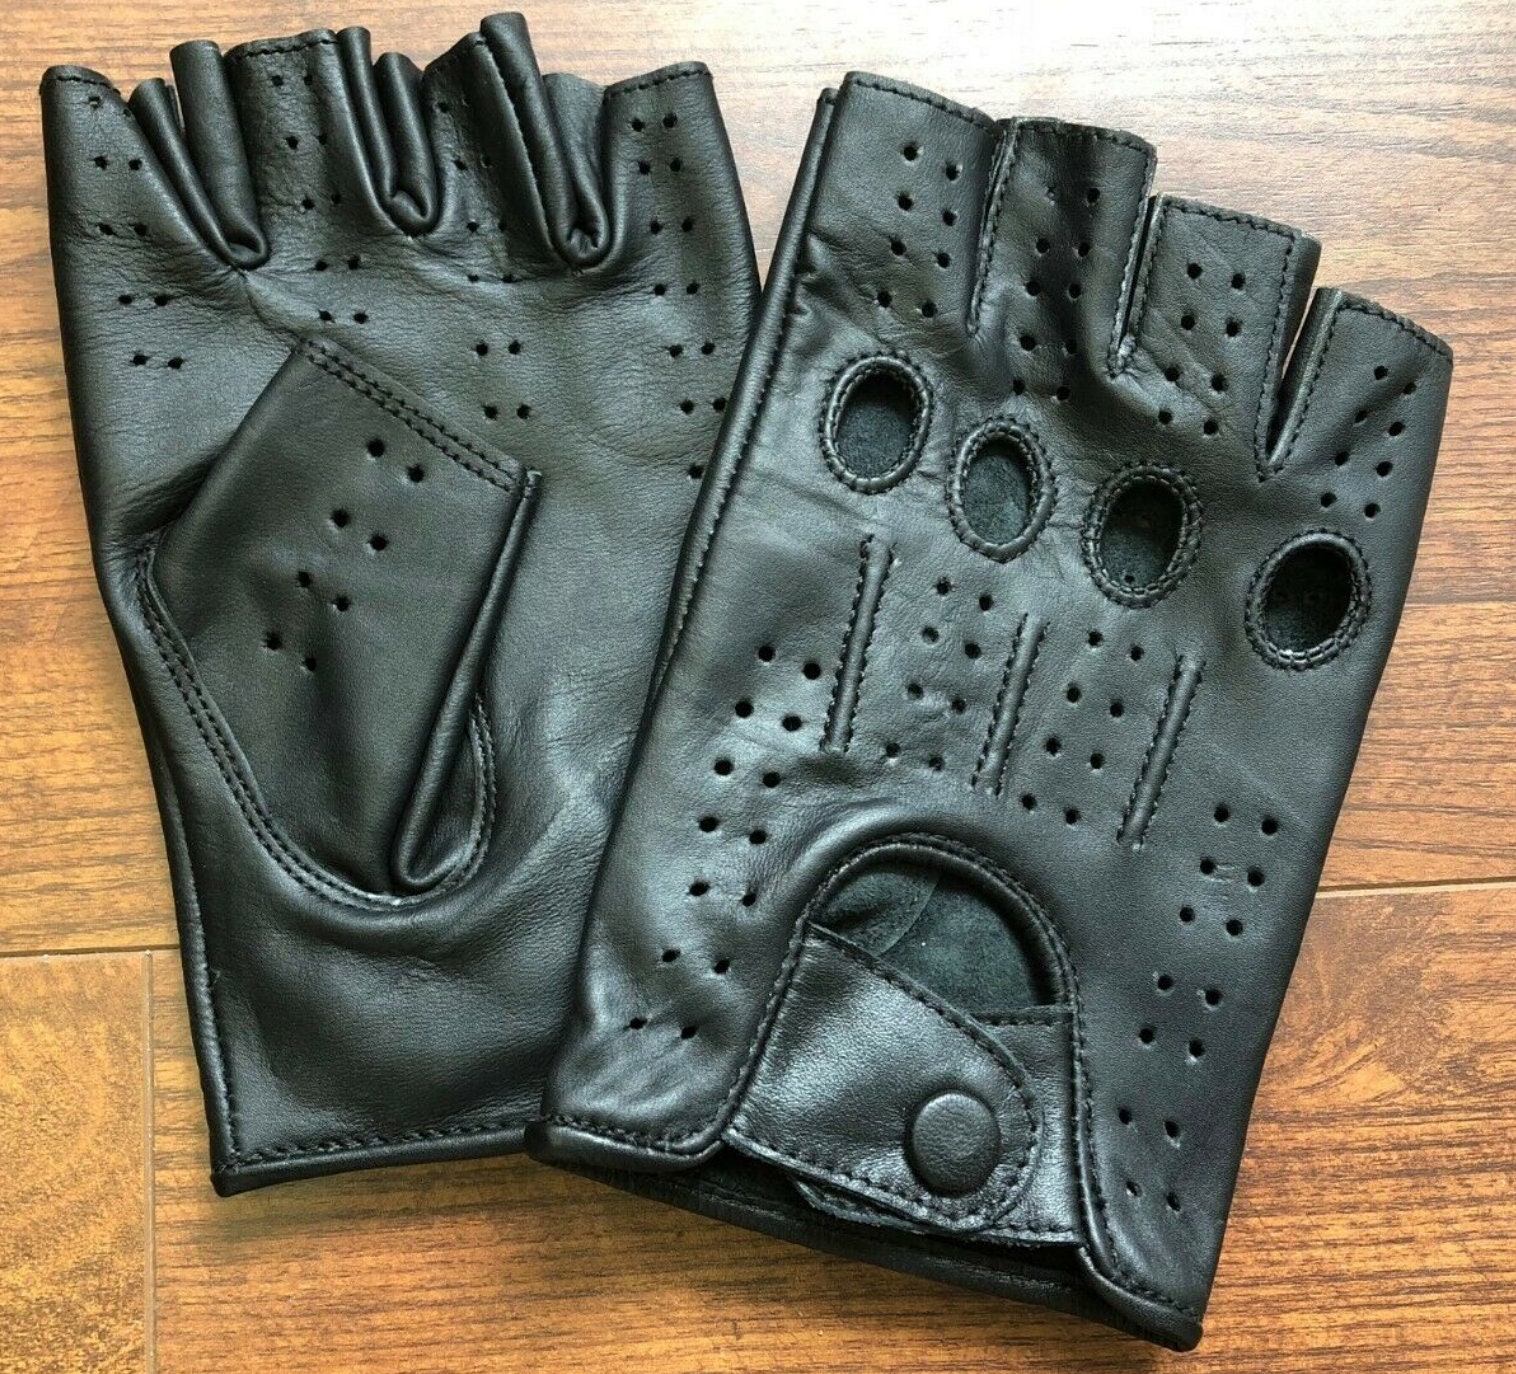 leather lv gloves